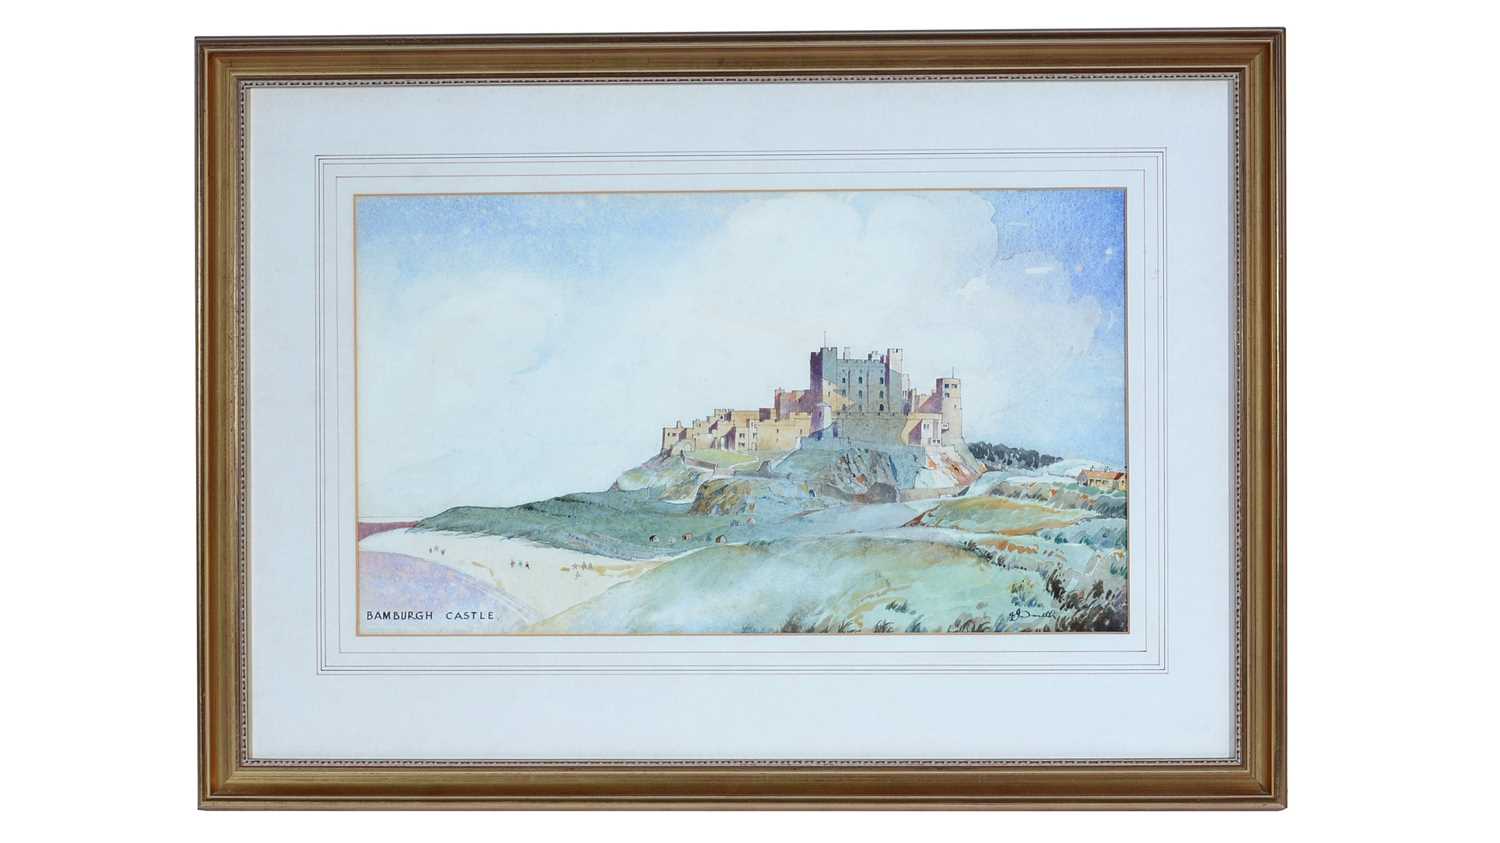 Lot 56 - J. Smith - Bamburgh Castle | watercolour